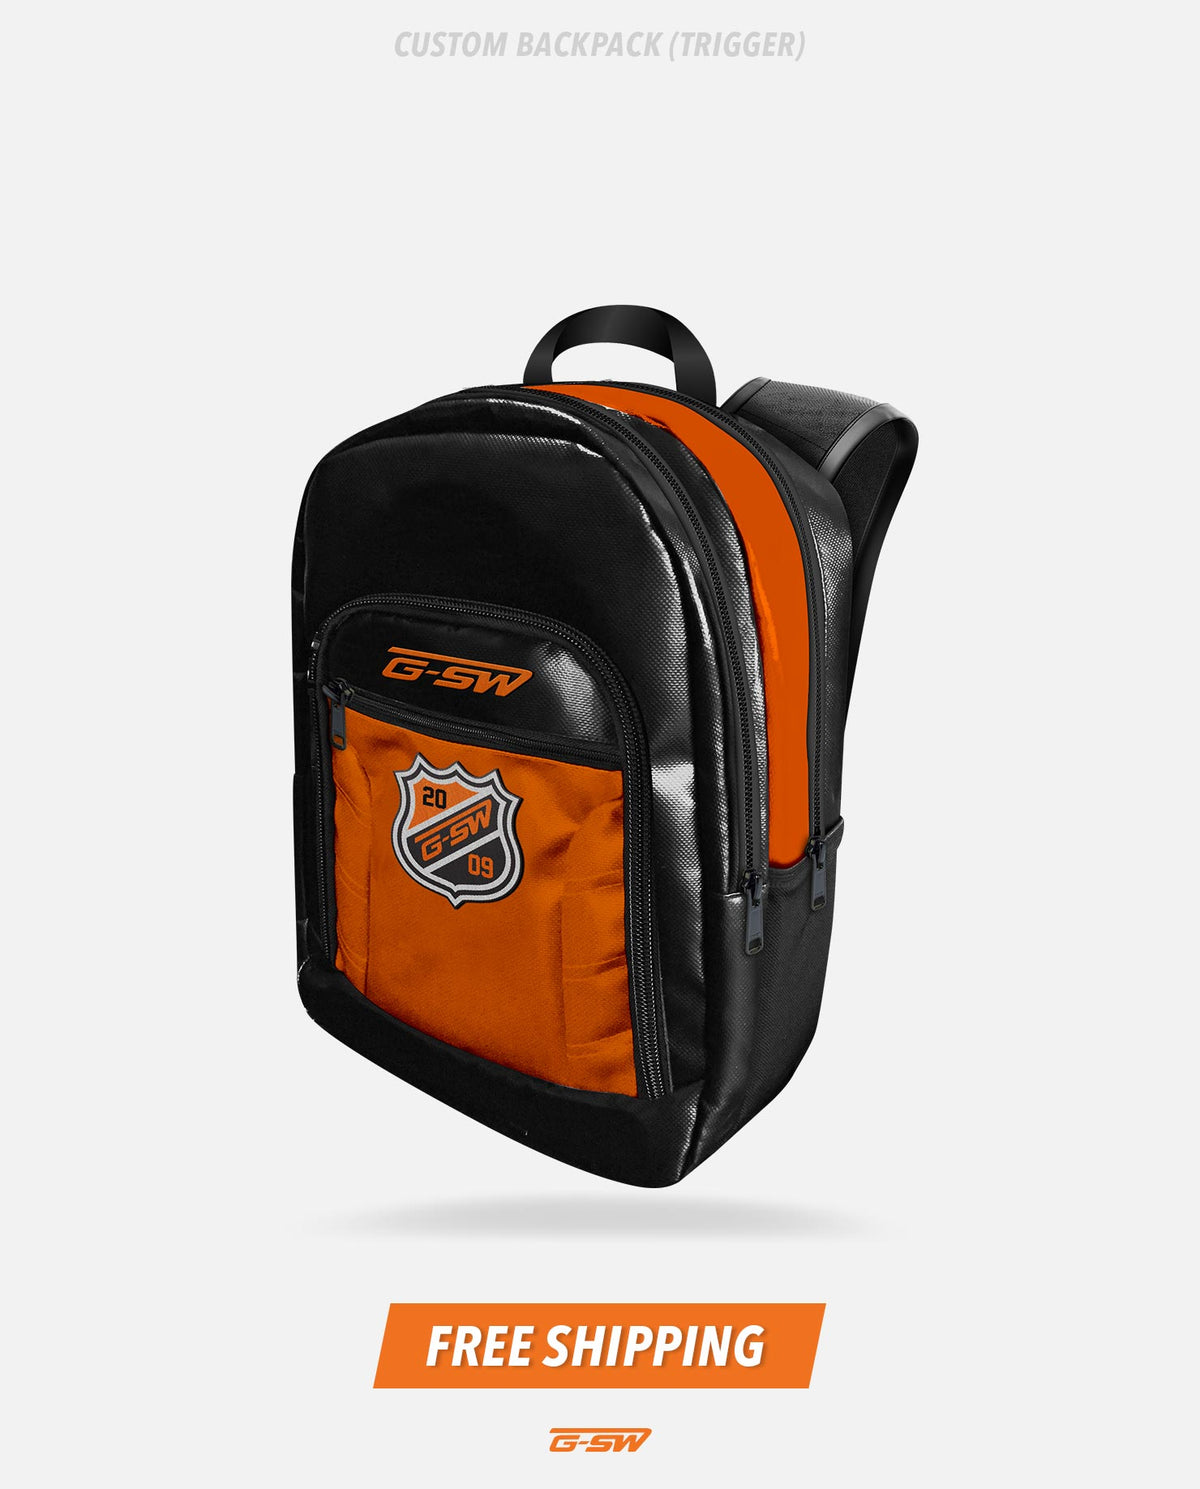 GSW Custom Backpack (Trigger)